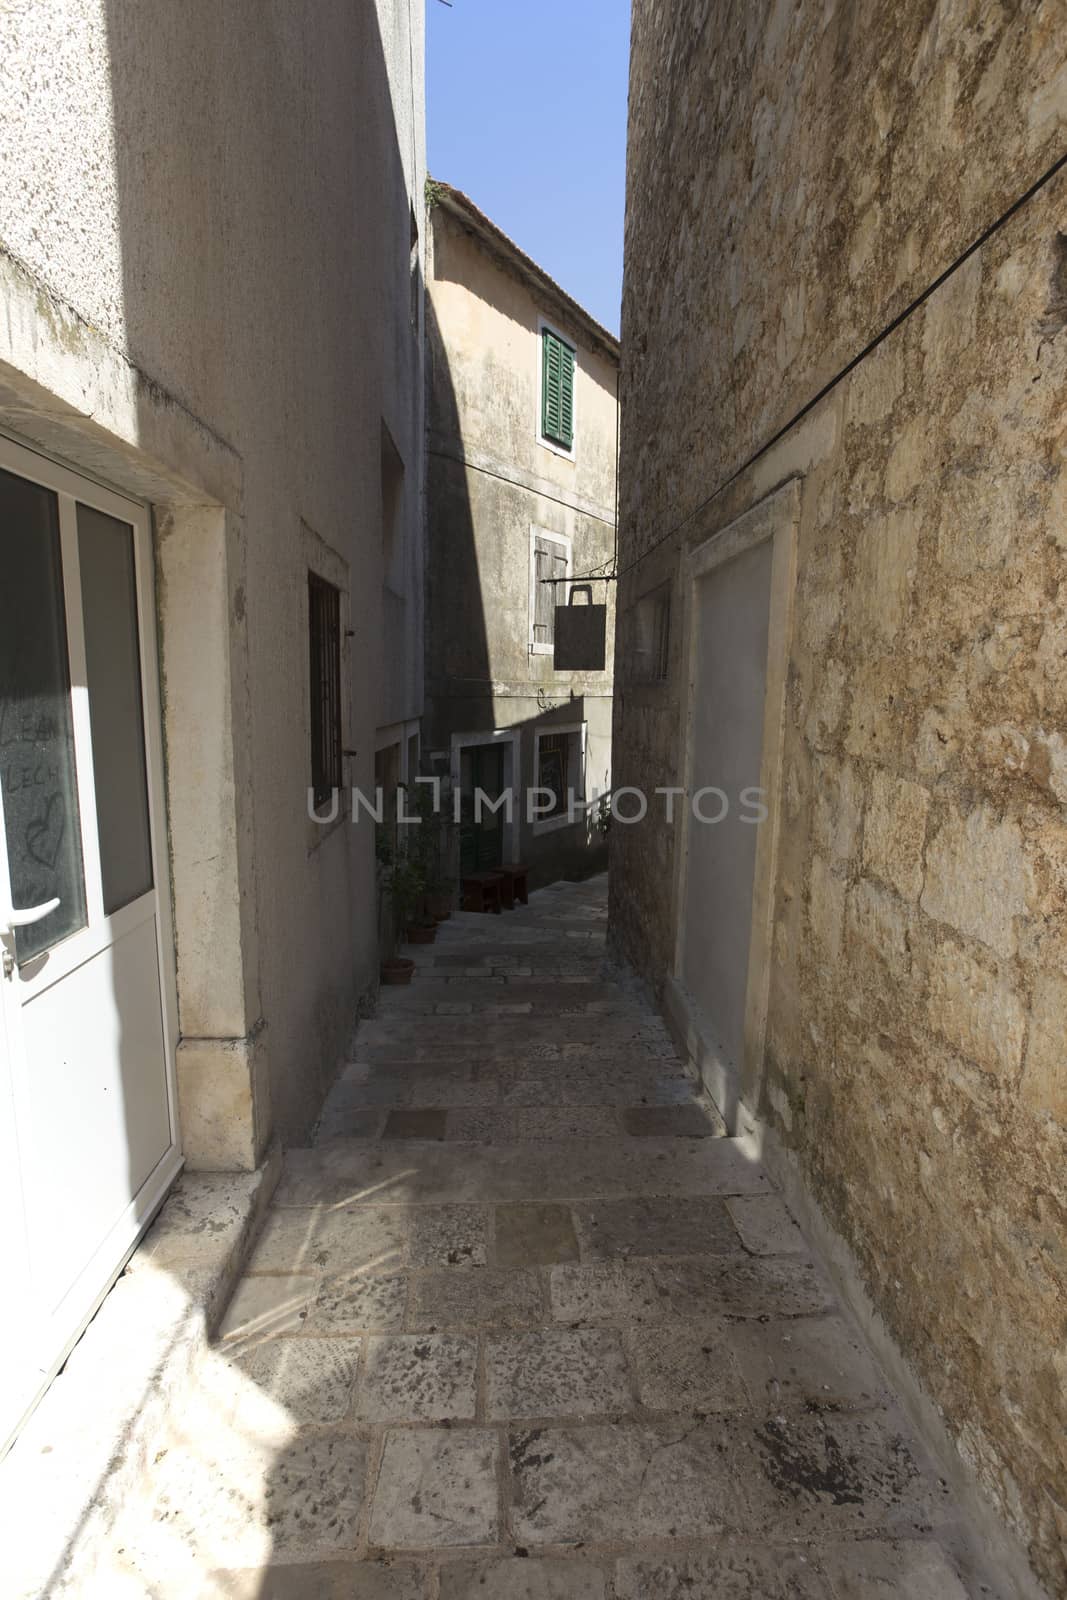 Narrow empty street of medieval town by eswaran